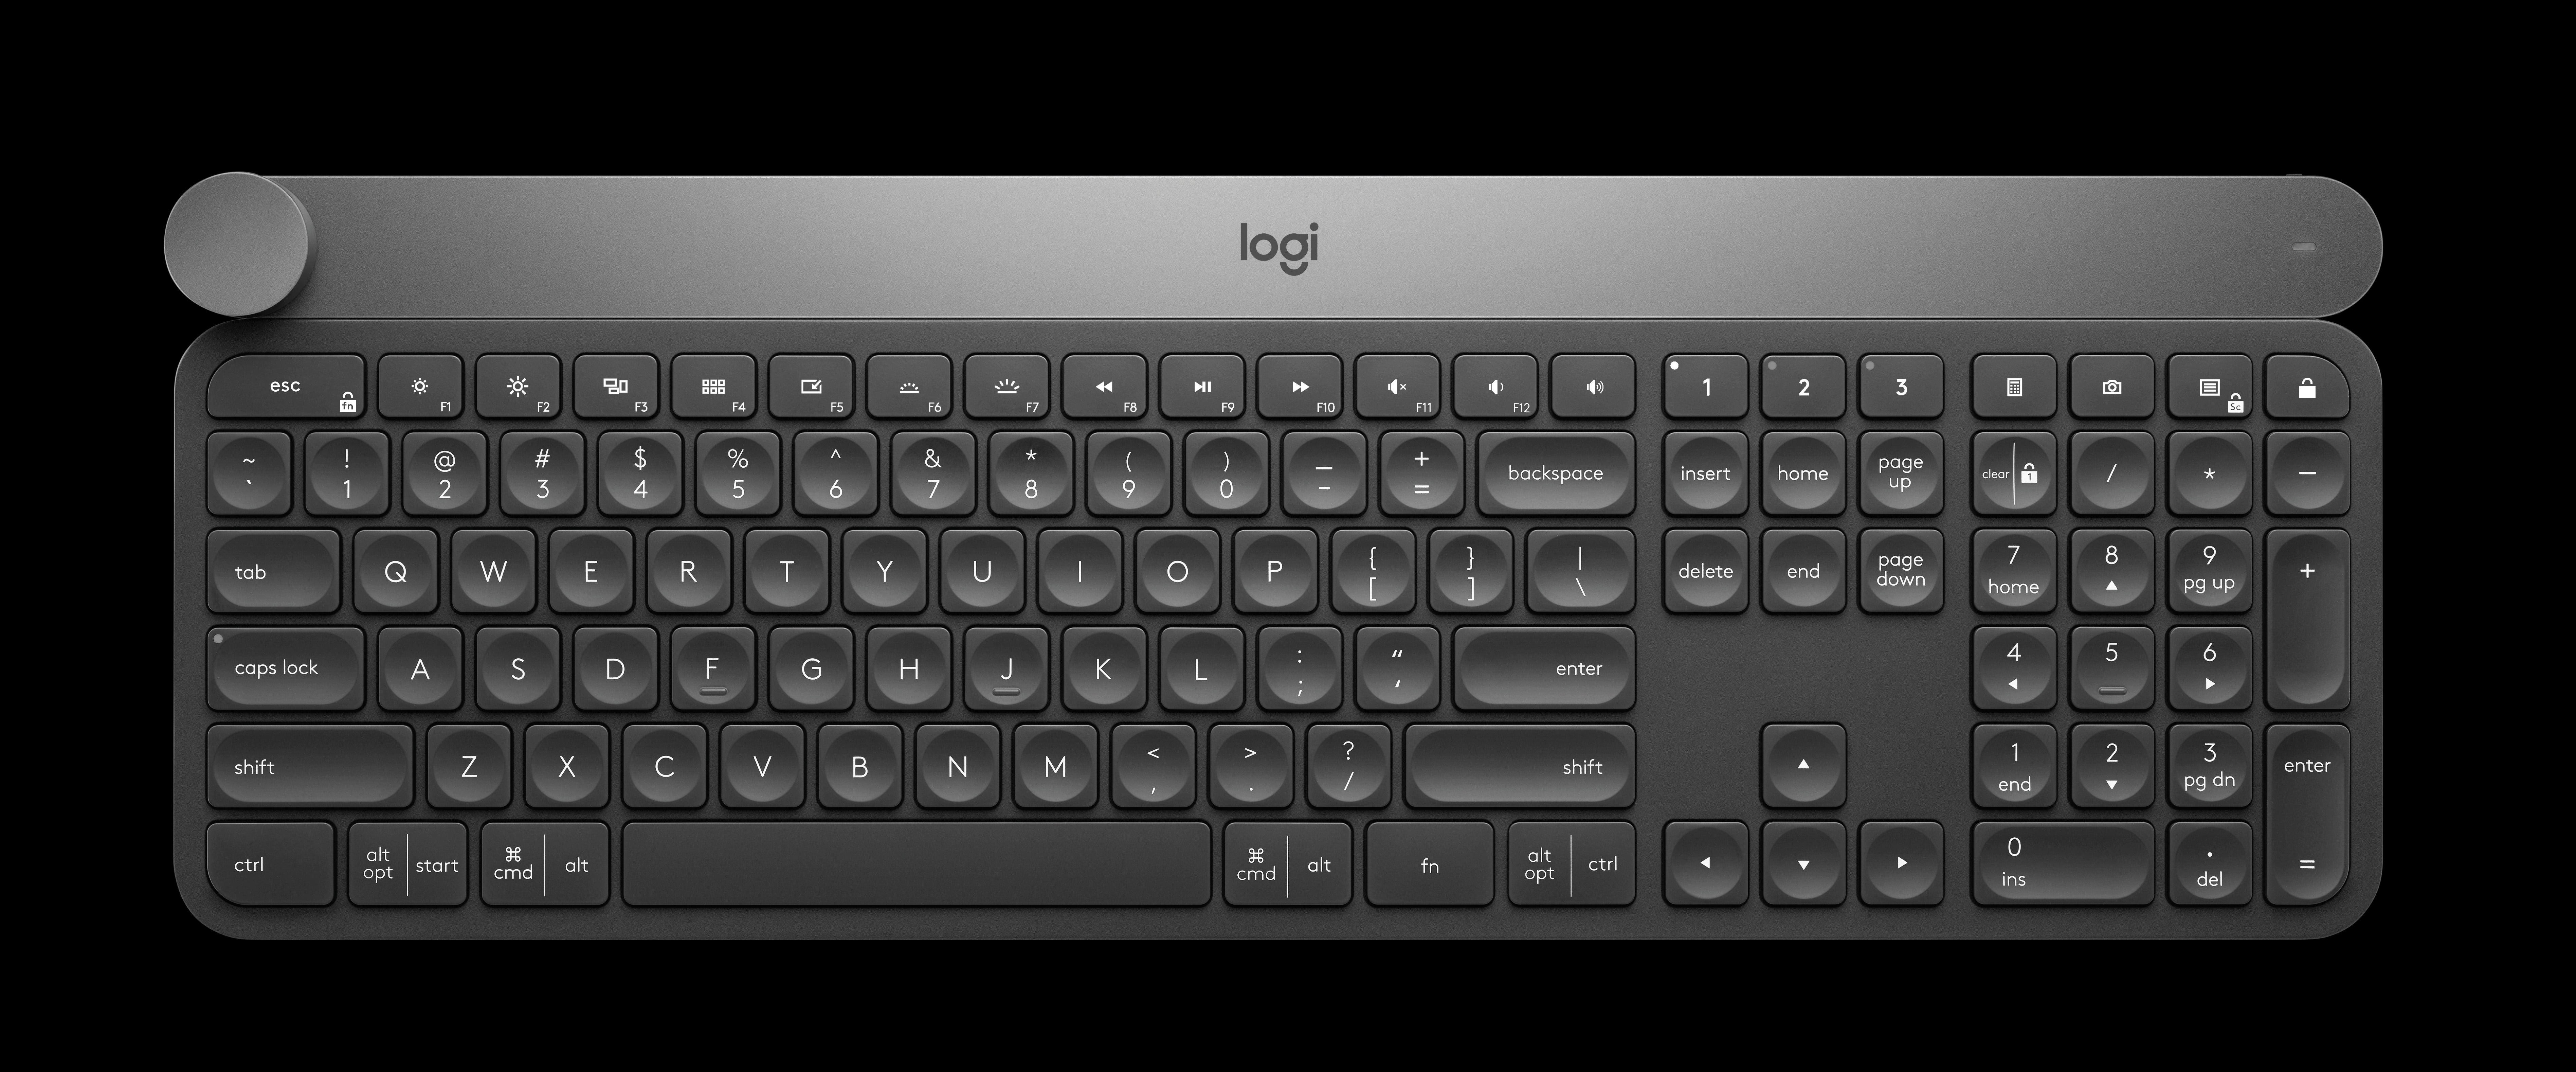 Basic Keyboard Layout